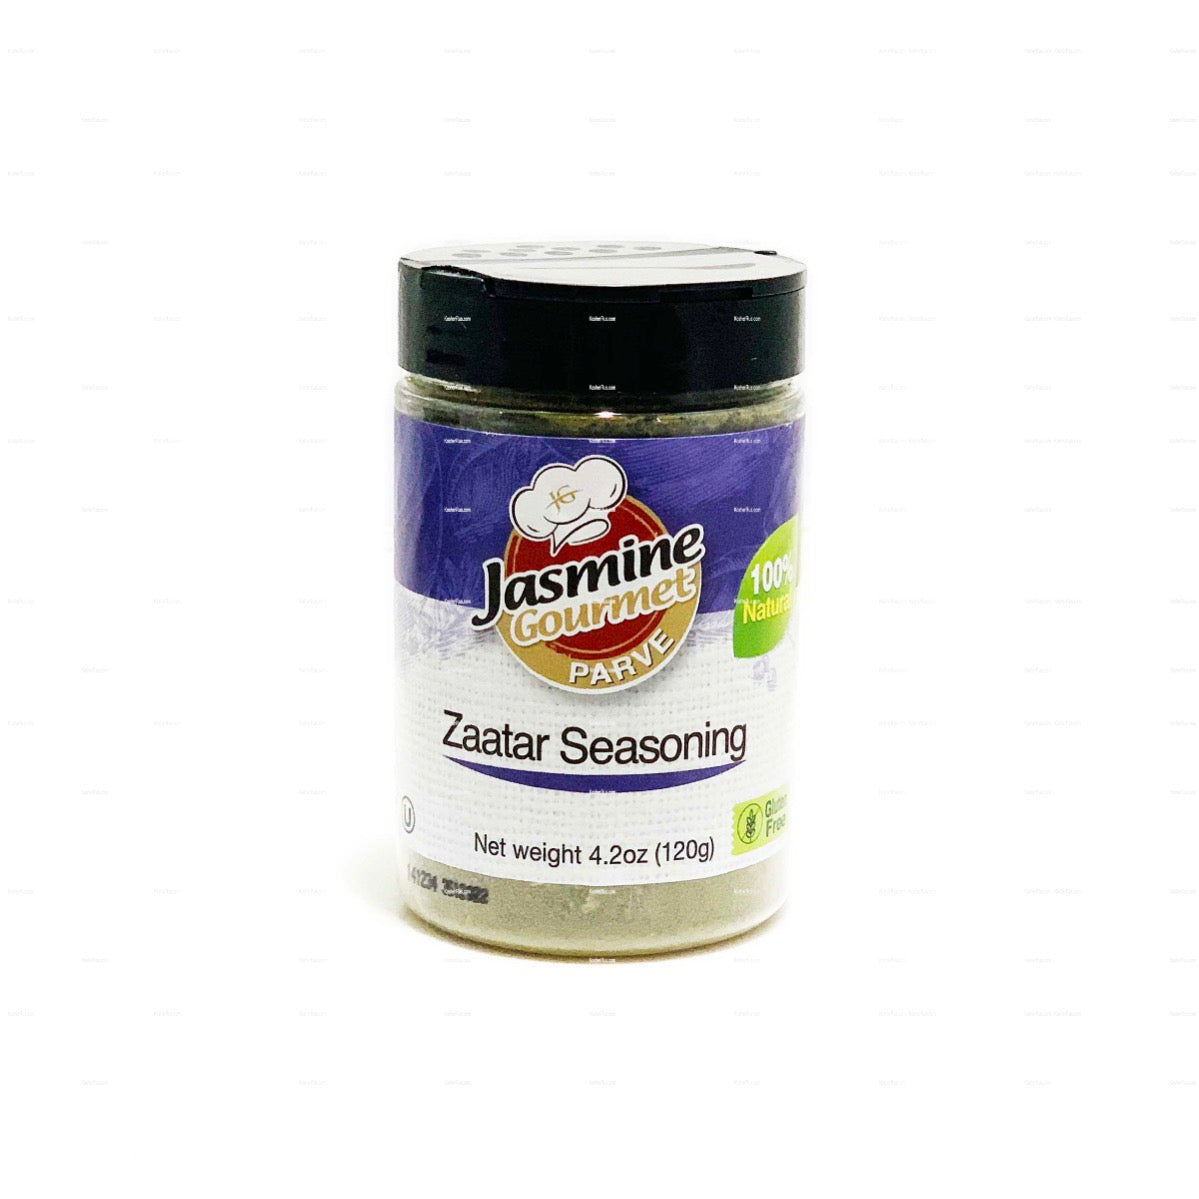 Jasmine Gourmet Zaatar Seasoning 4.2oz